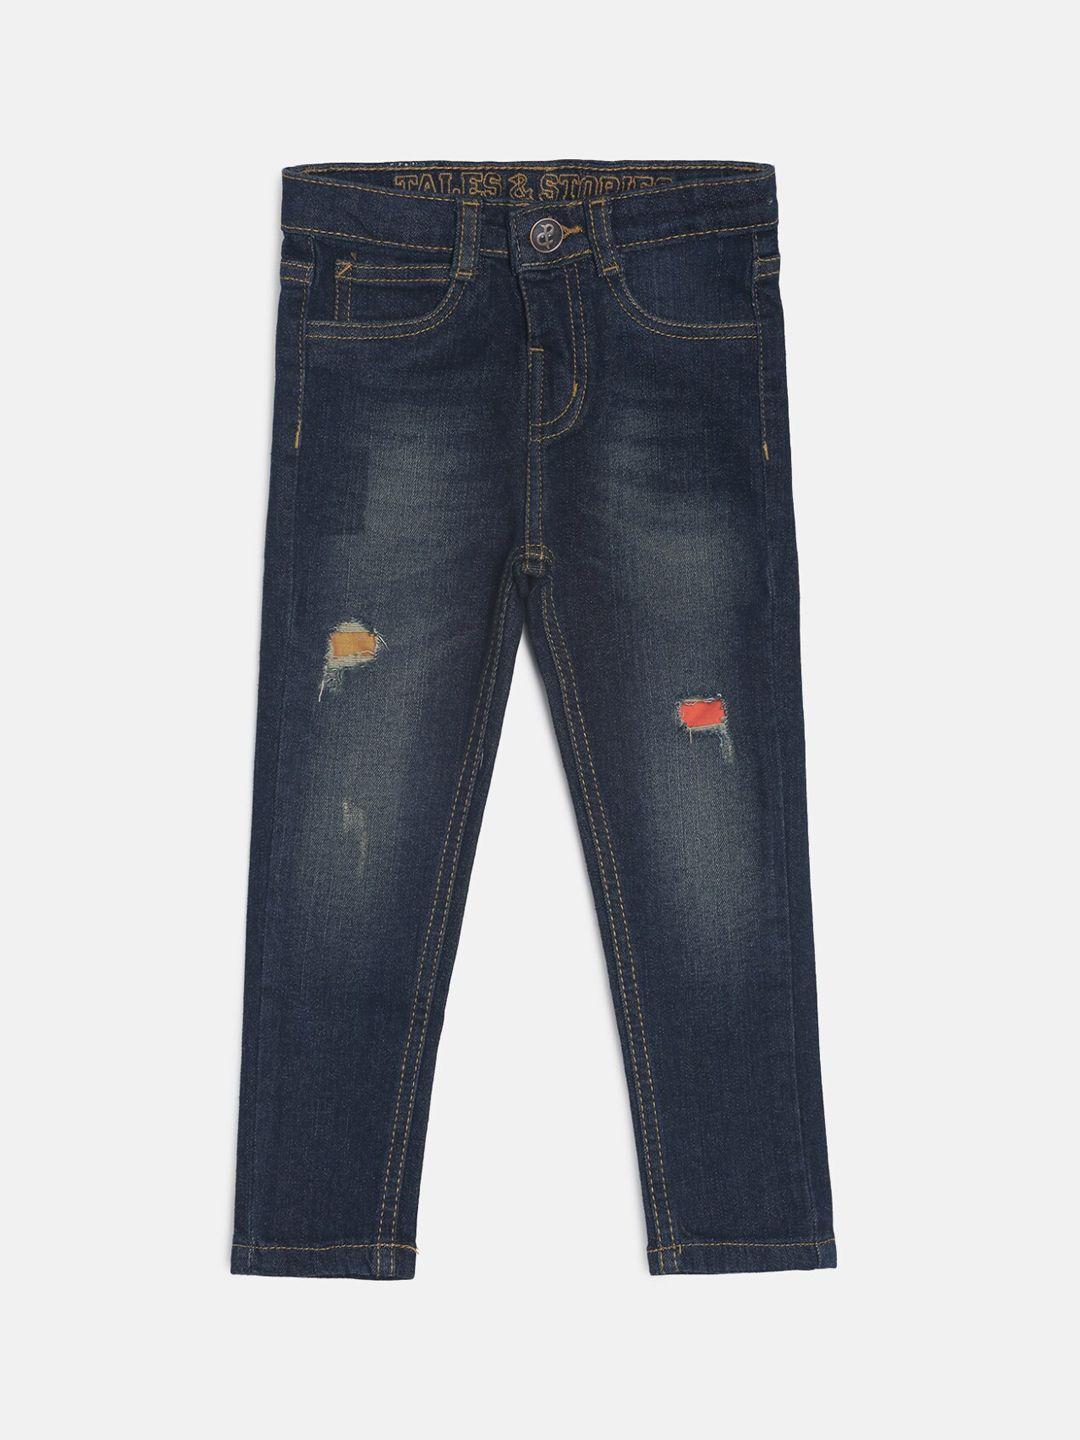 tales-&-stories-boys-navy-blue-slim-fit-mid-rise-mildly-distressed-jeans